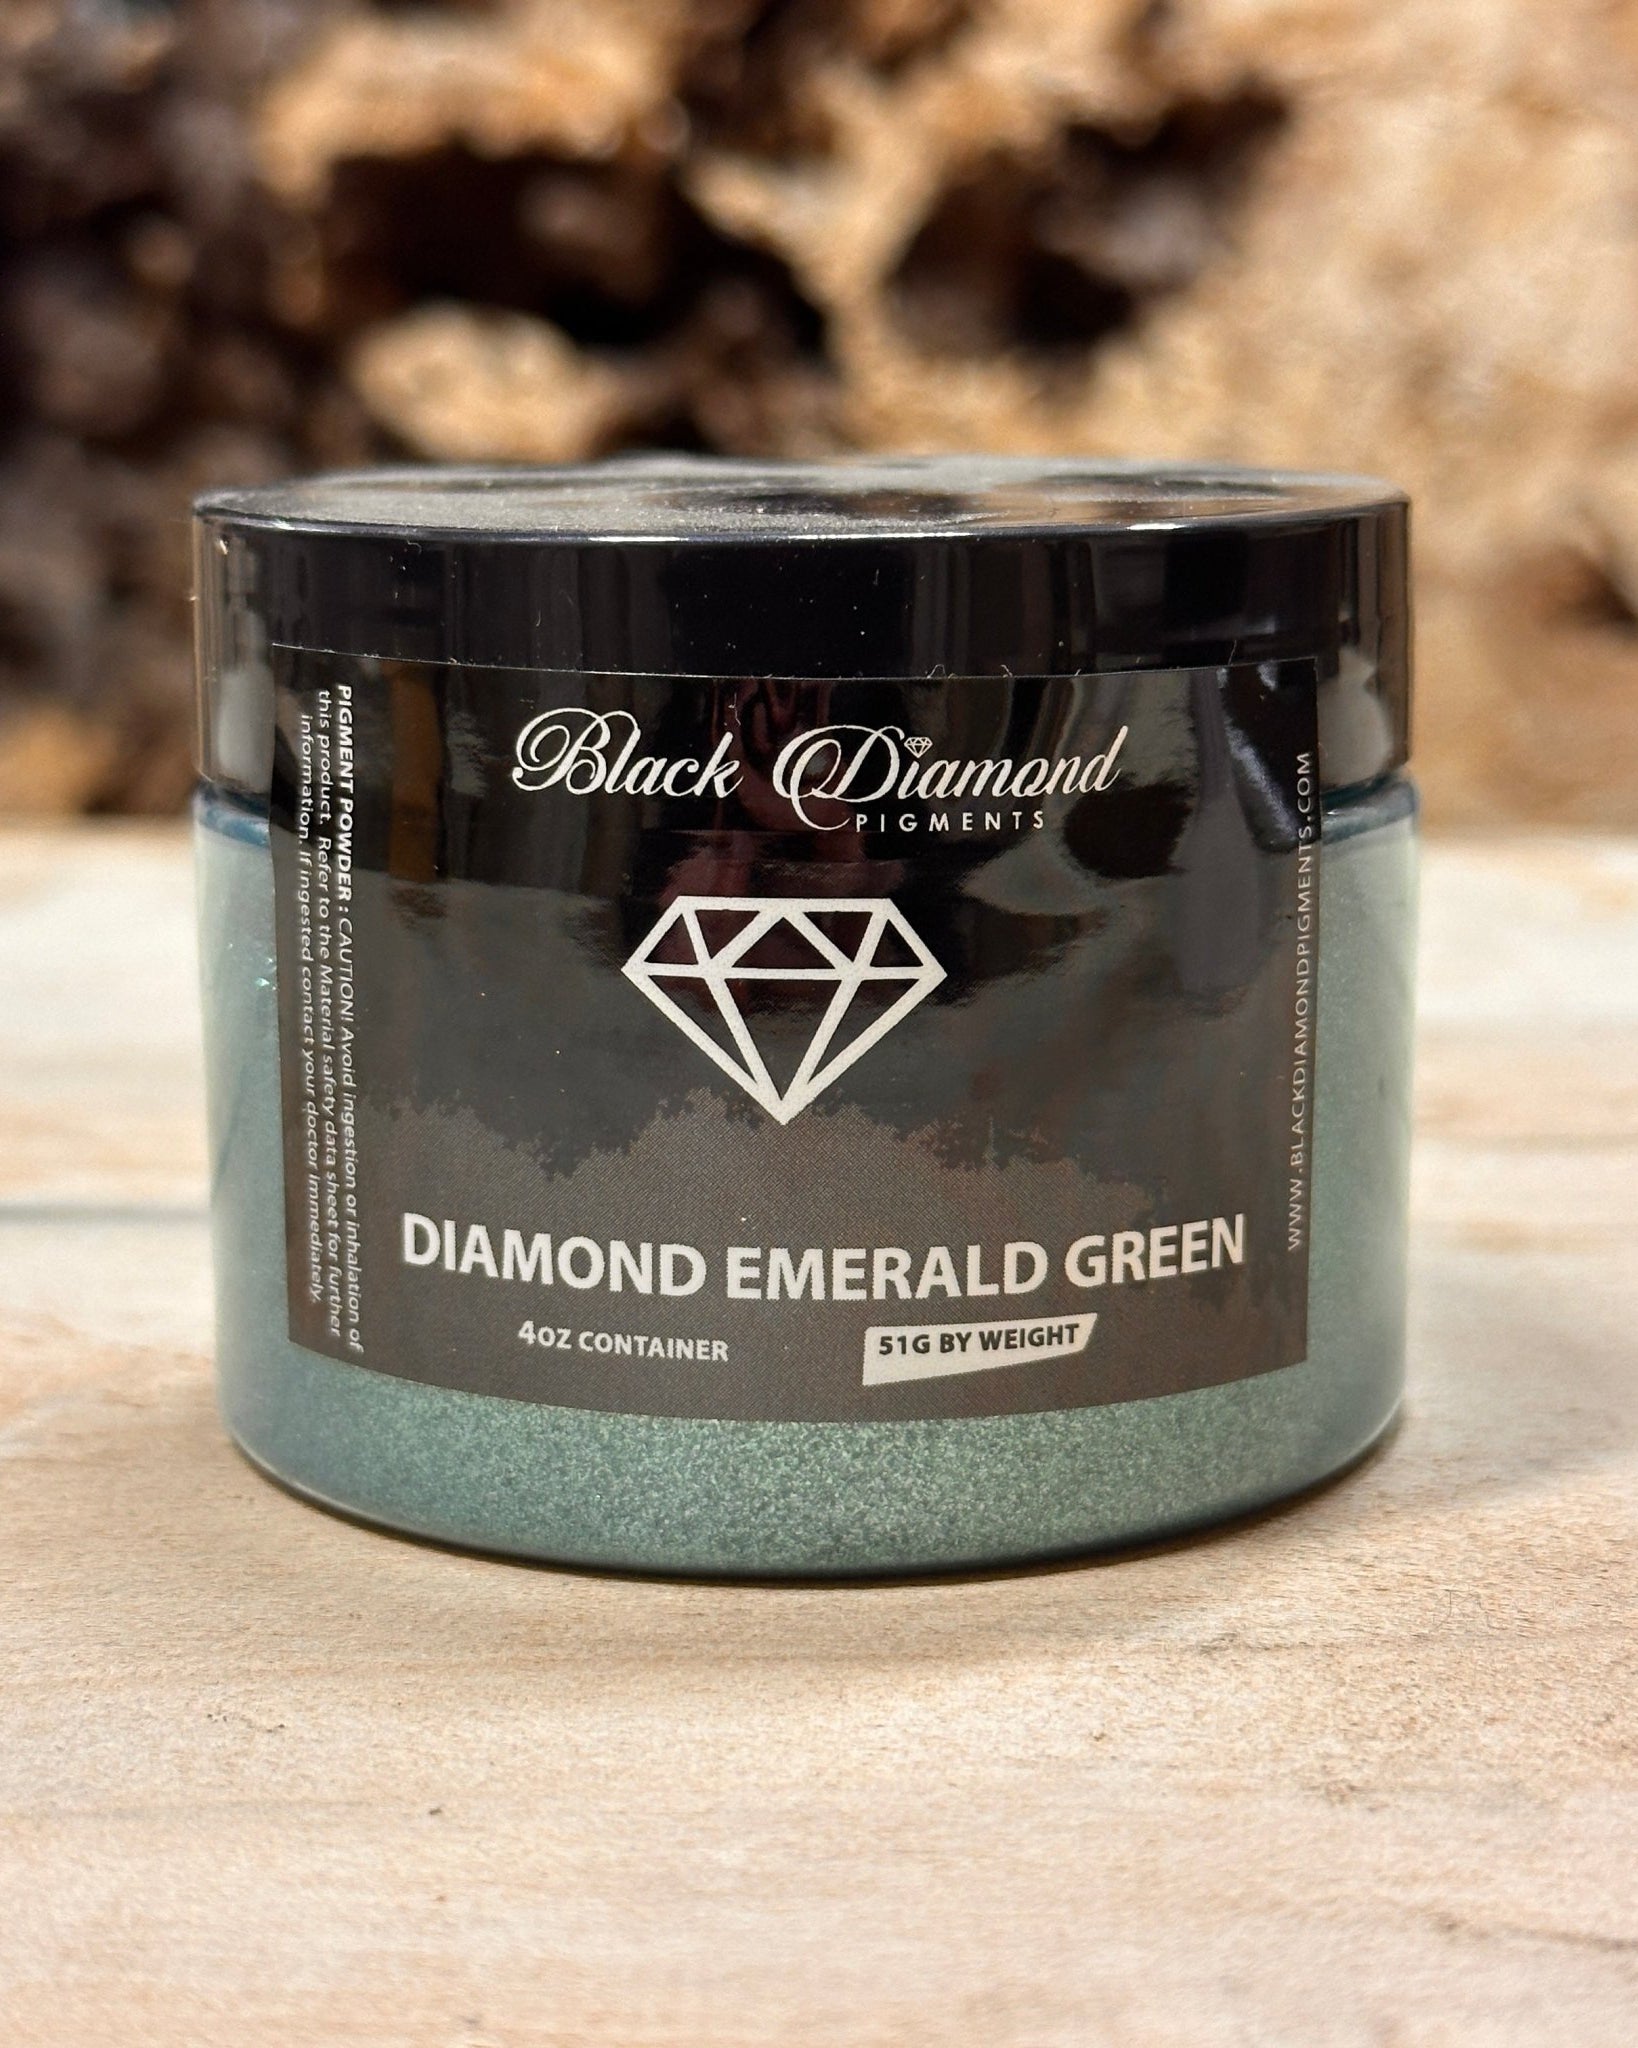 Black Diamond Pigments - Diamond Emerald Green - 51g | Mica Pigment | Black Diamond Pigments